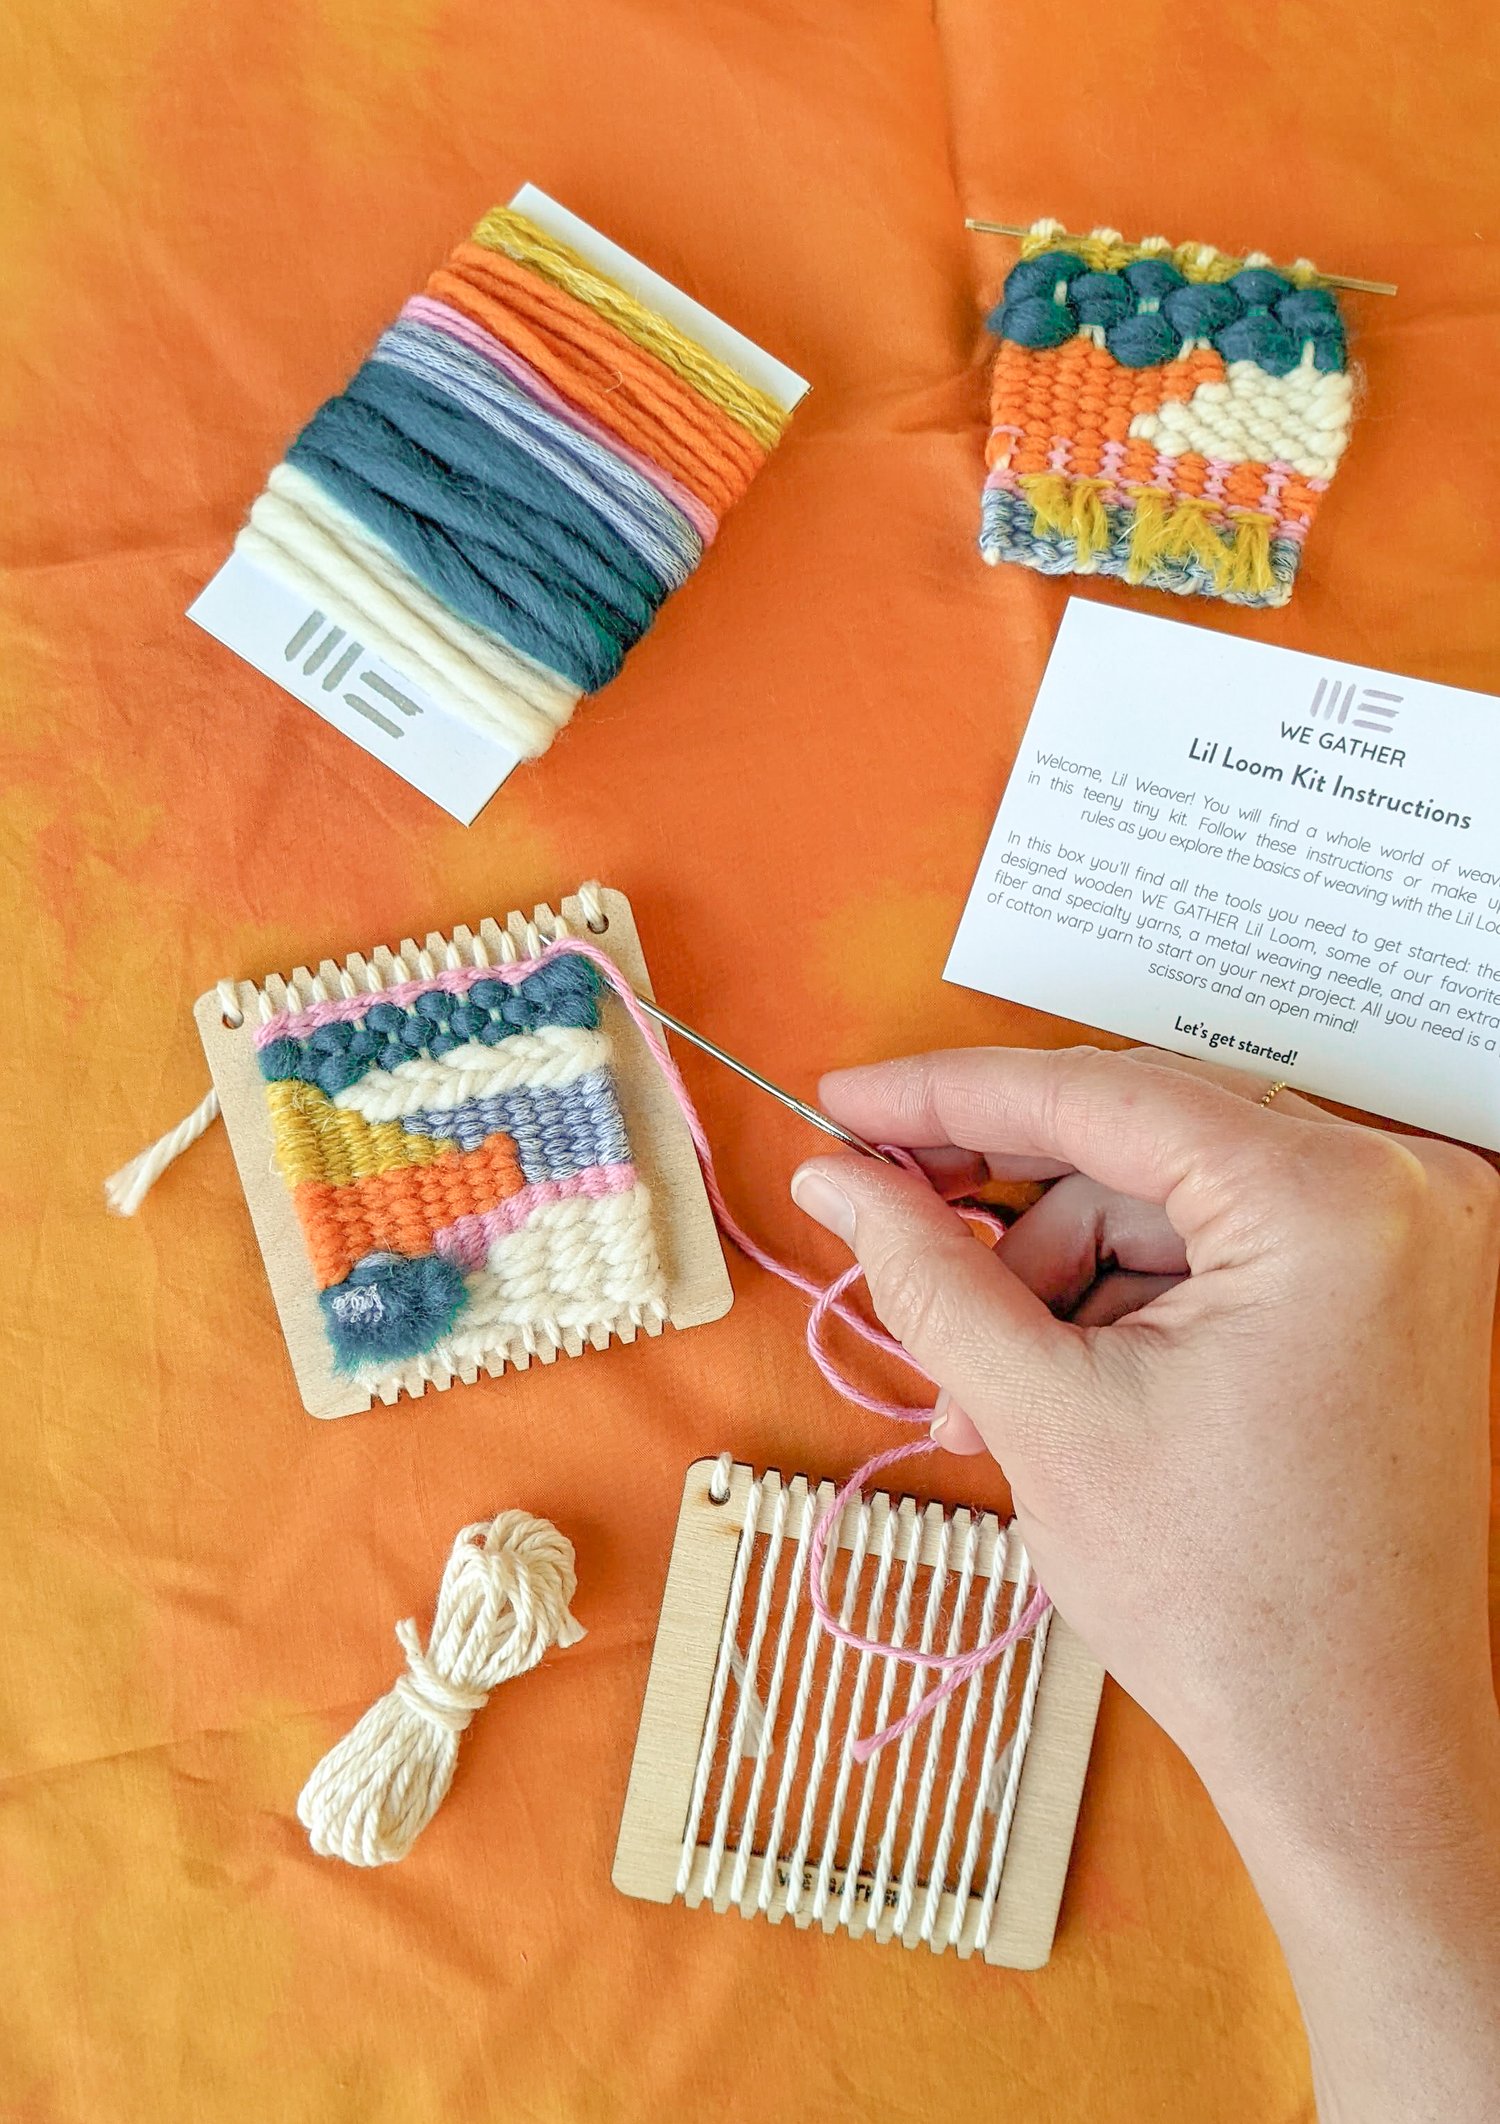 Looms, Weaving Kits, Yarn and tutorials